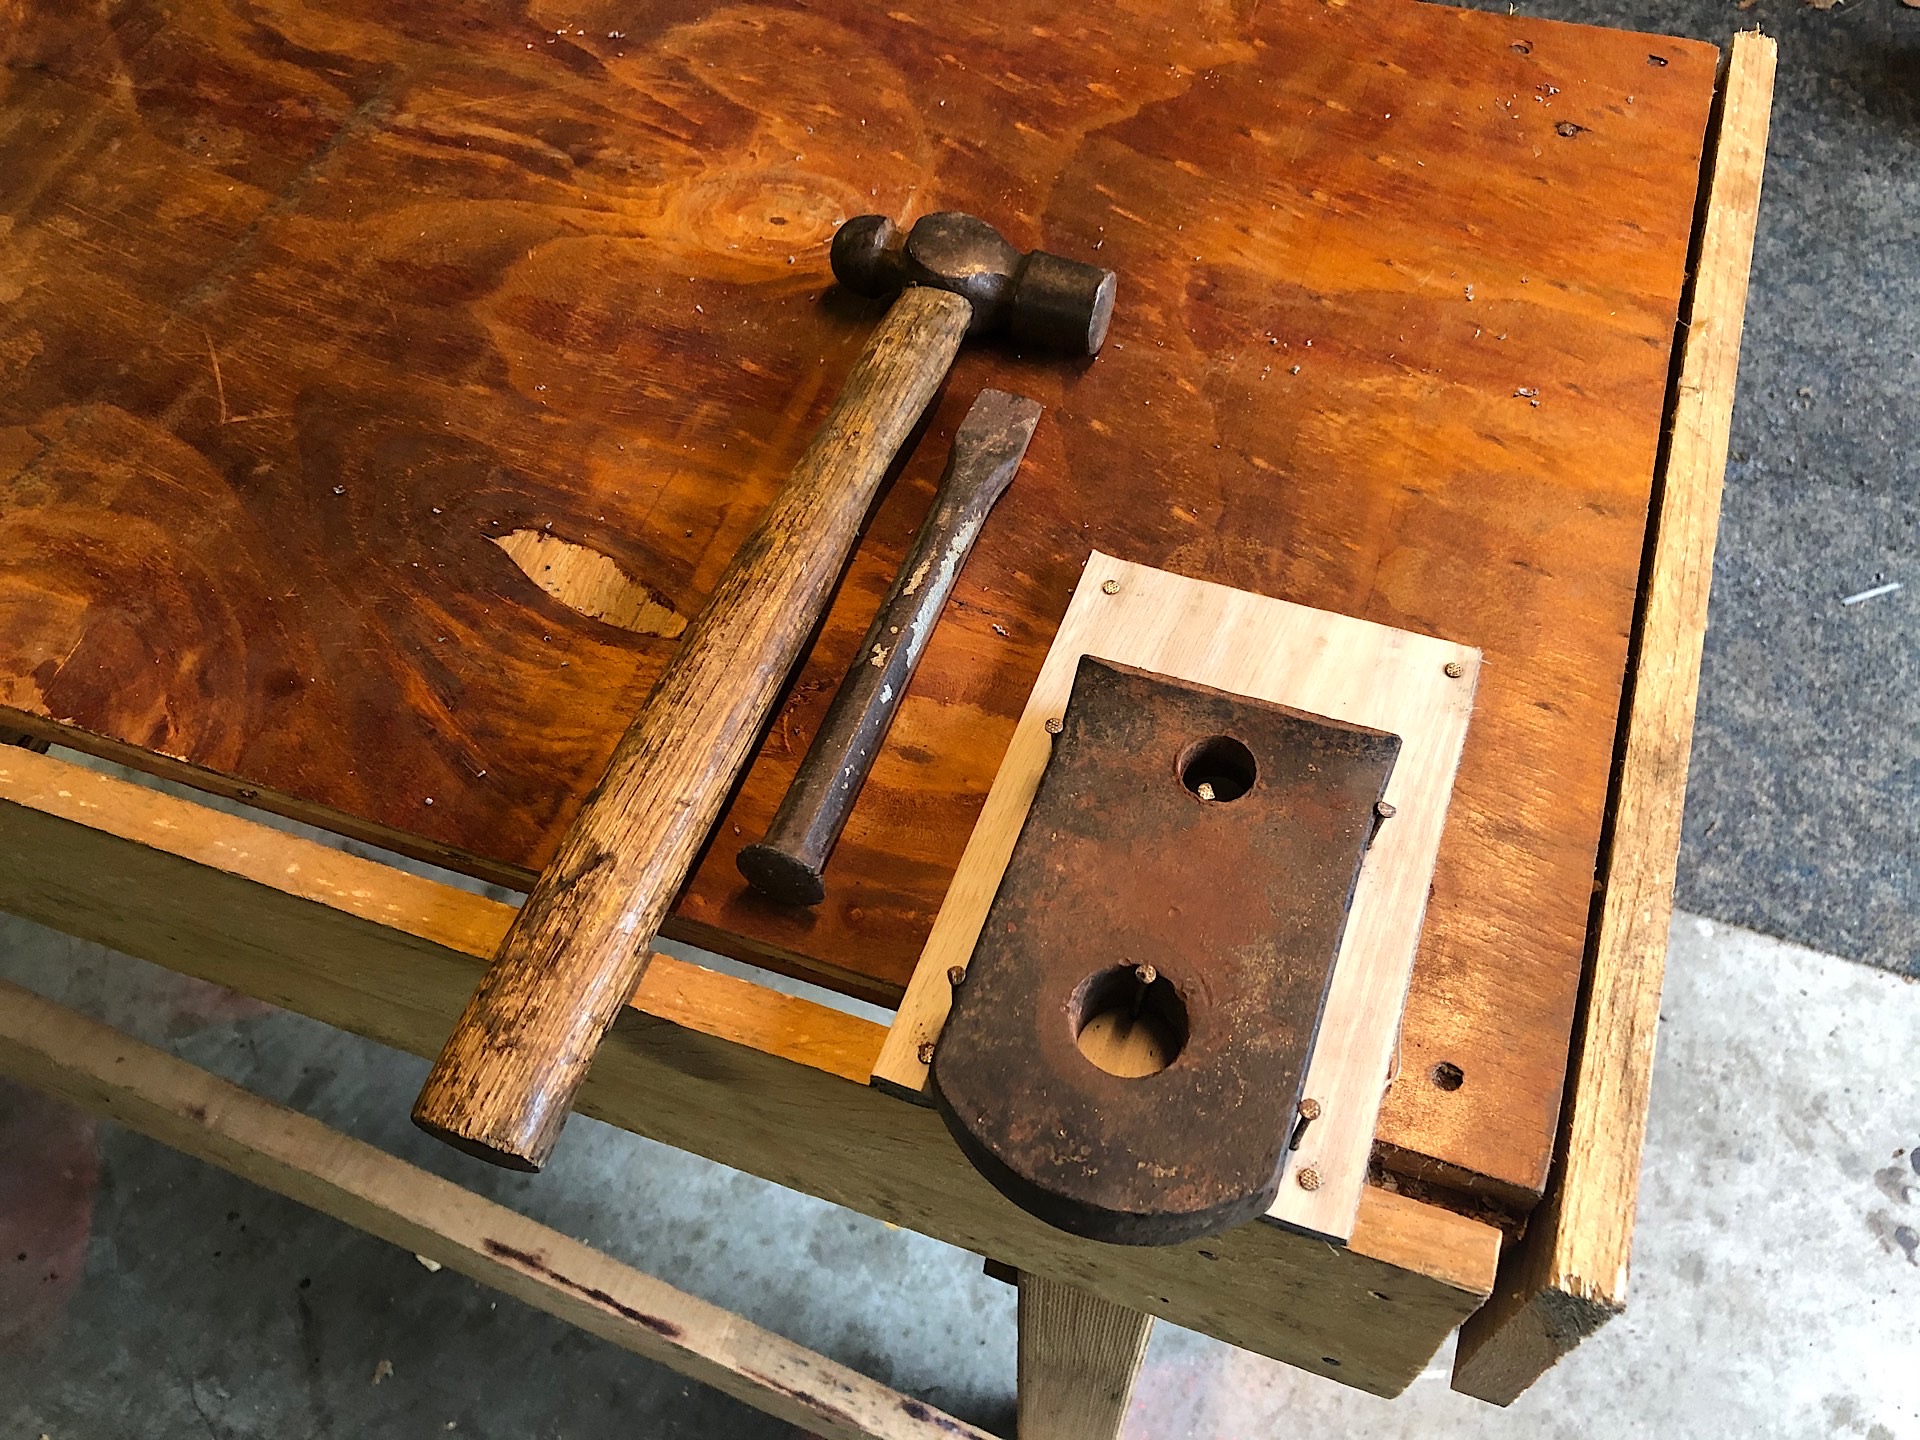 Mini anvil on a workbench